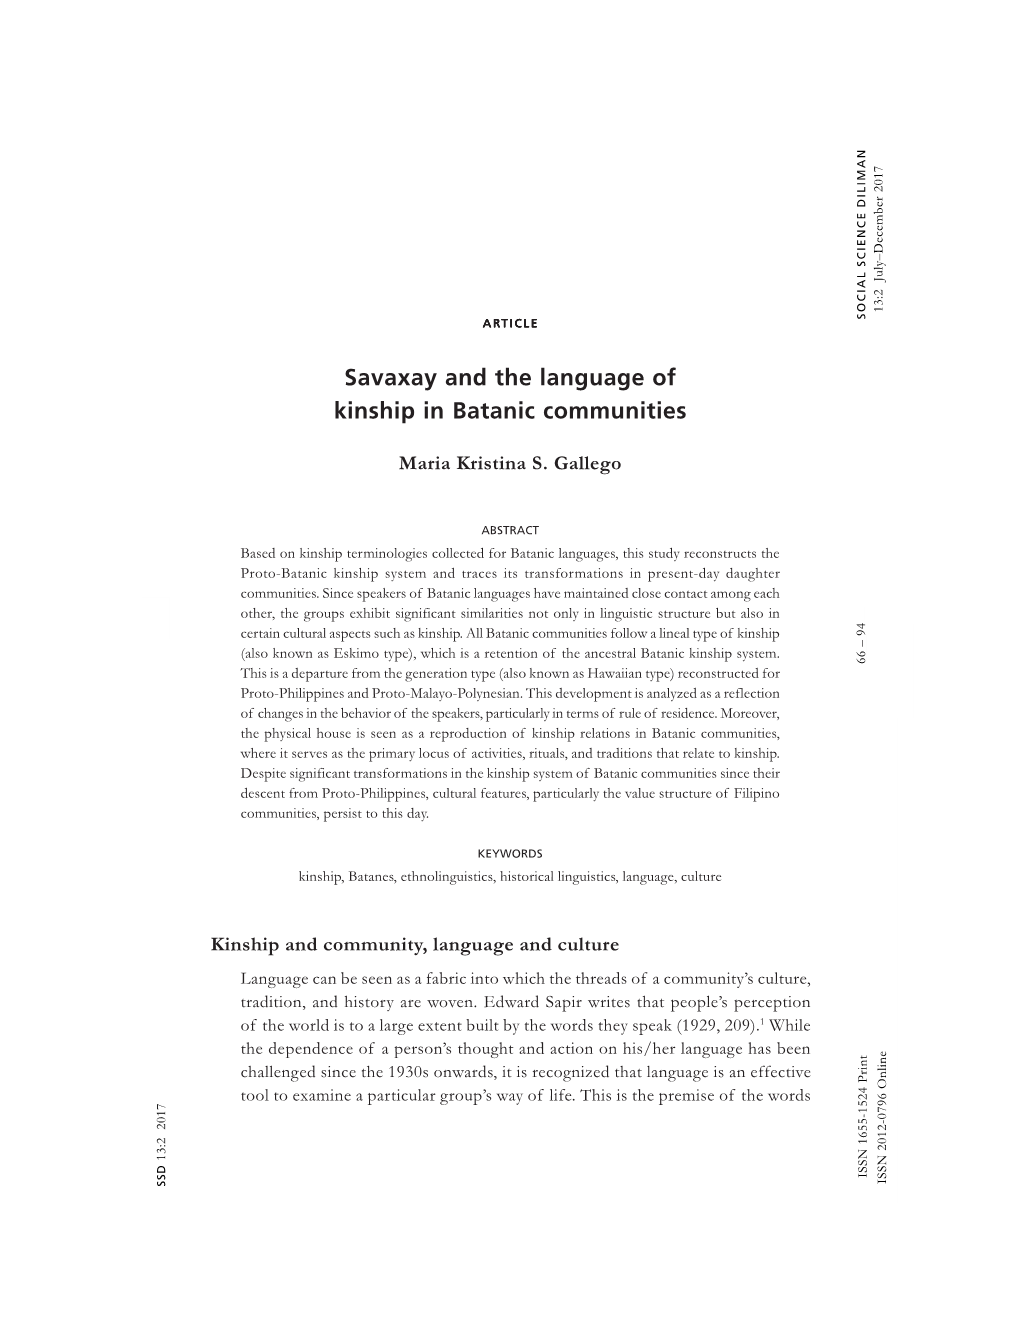 Savaxay and the Language of Kinship in Batanic Communities